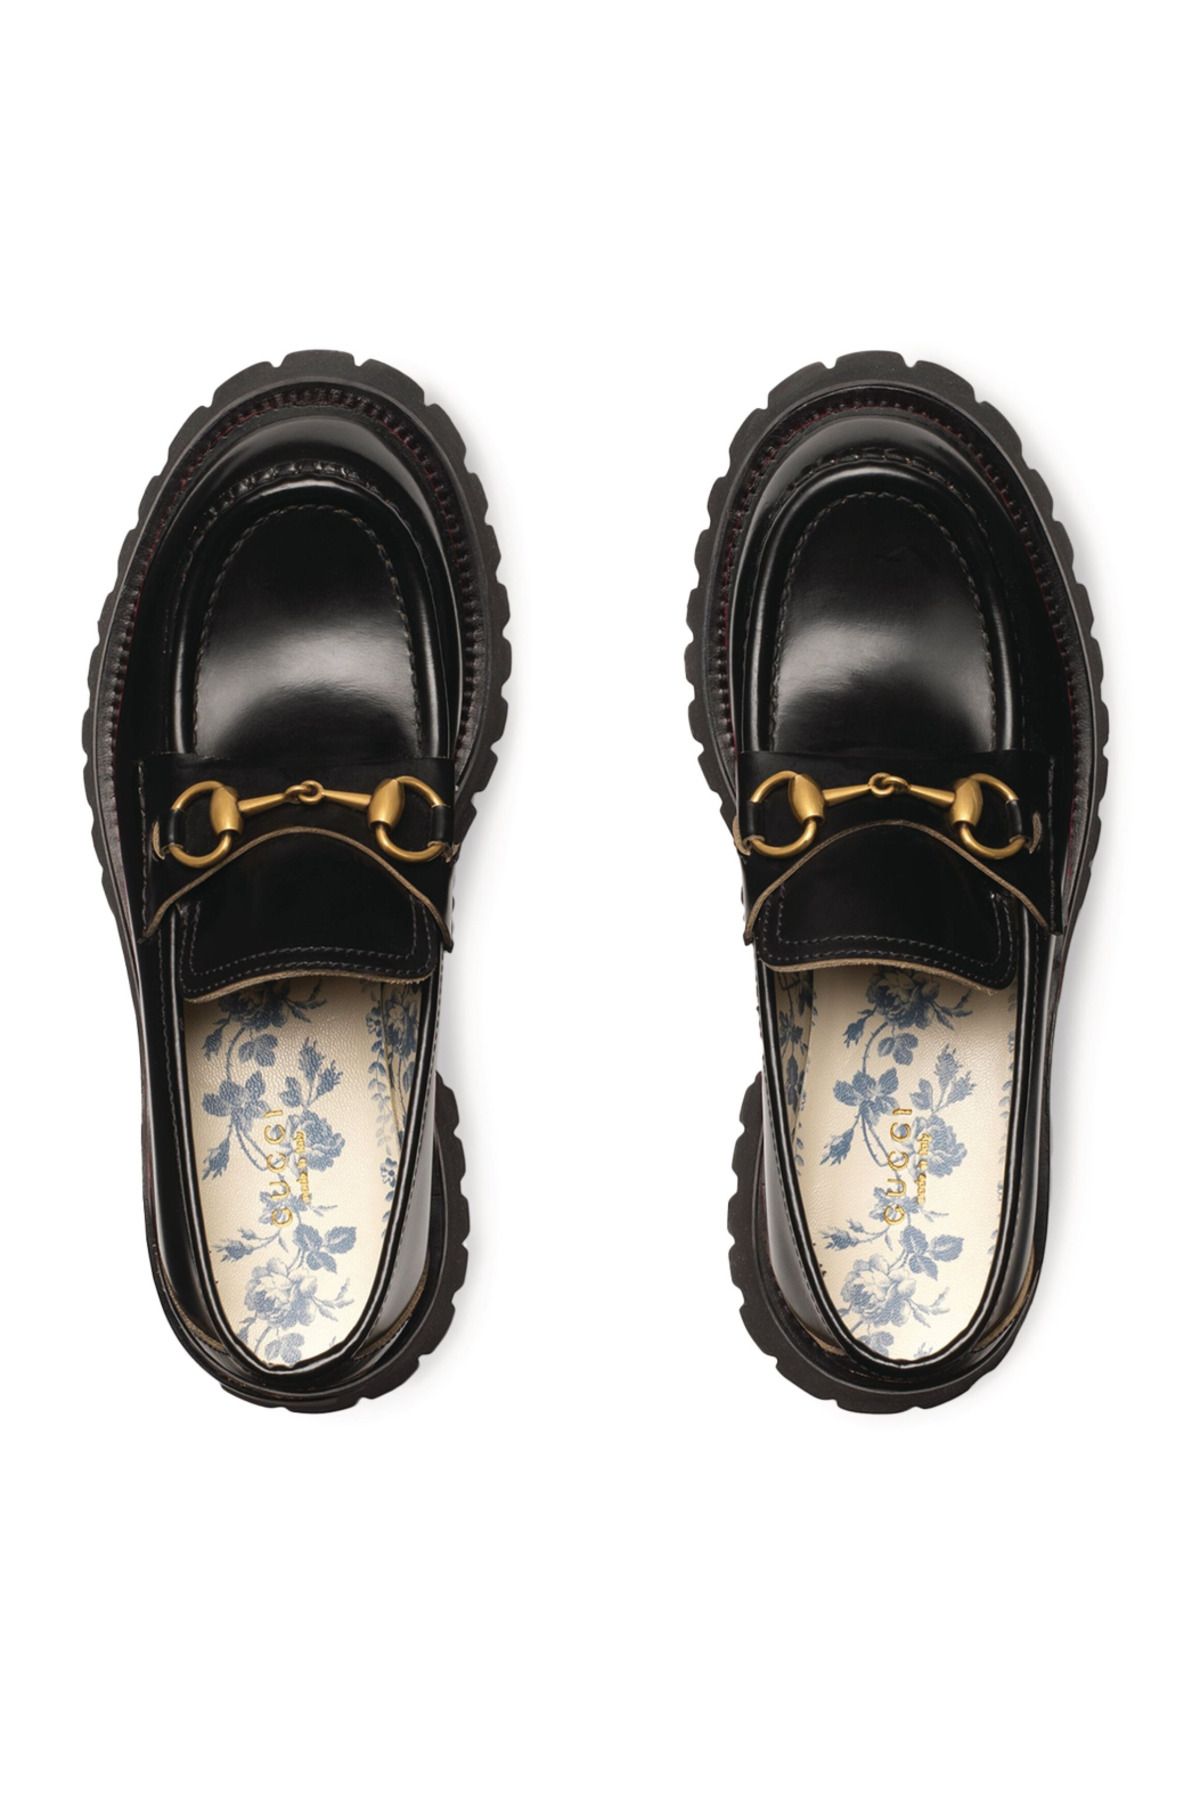 Gucci Leather Lug Sole Horsebit Loafers